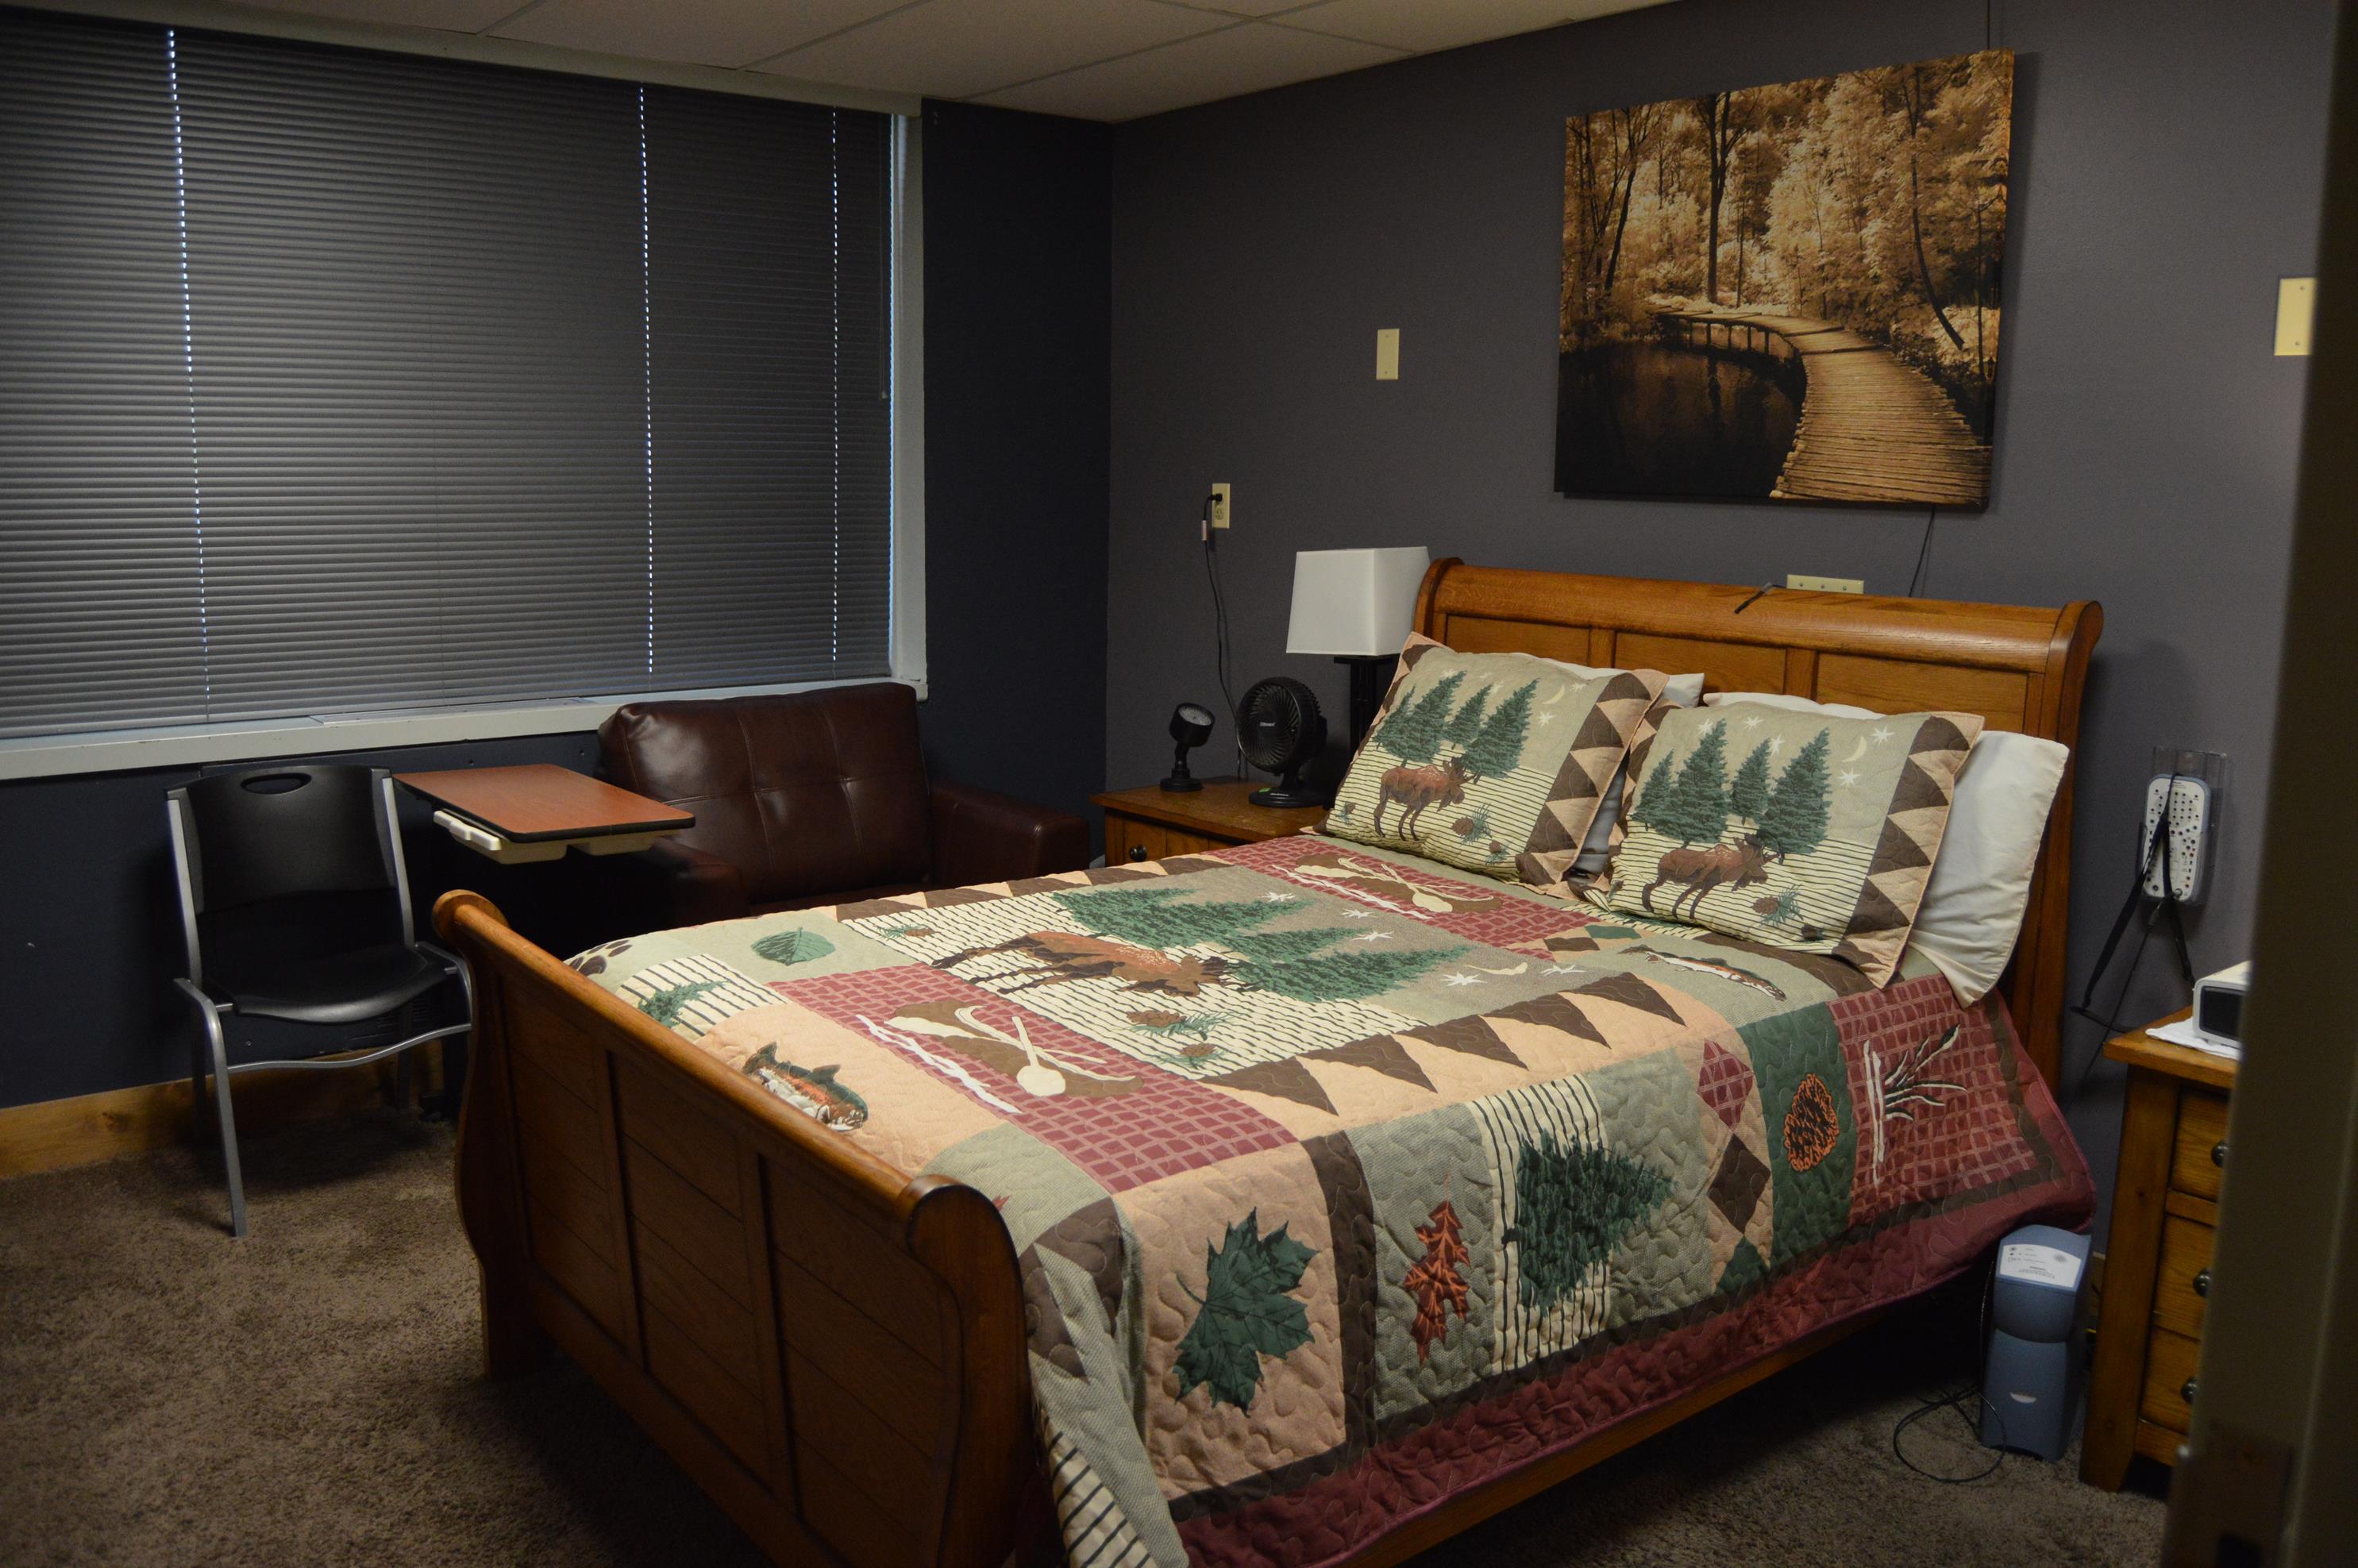 Bed MaaSleep Study Bedroomde for Study in Sleep Center